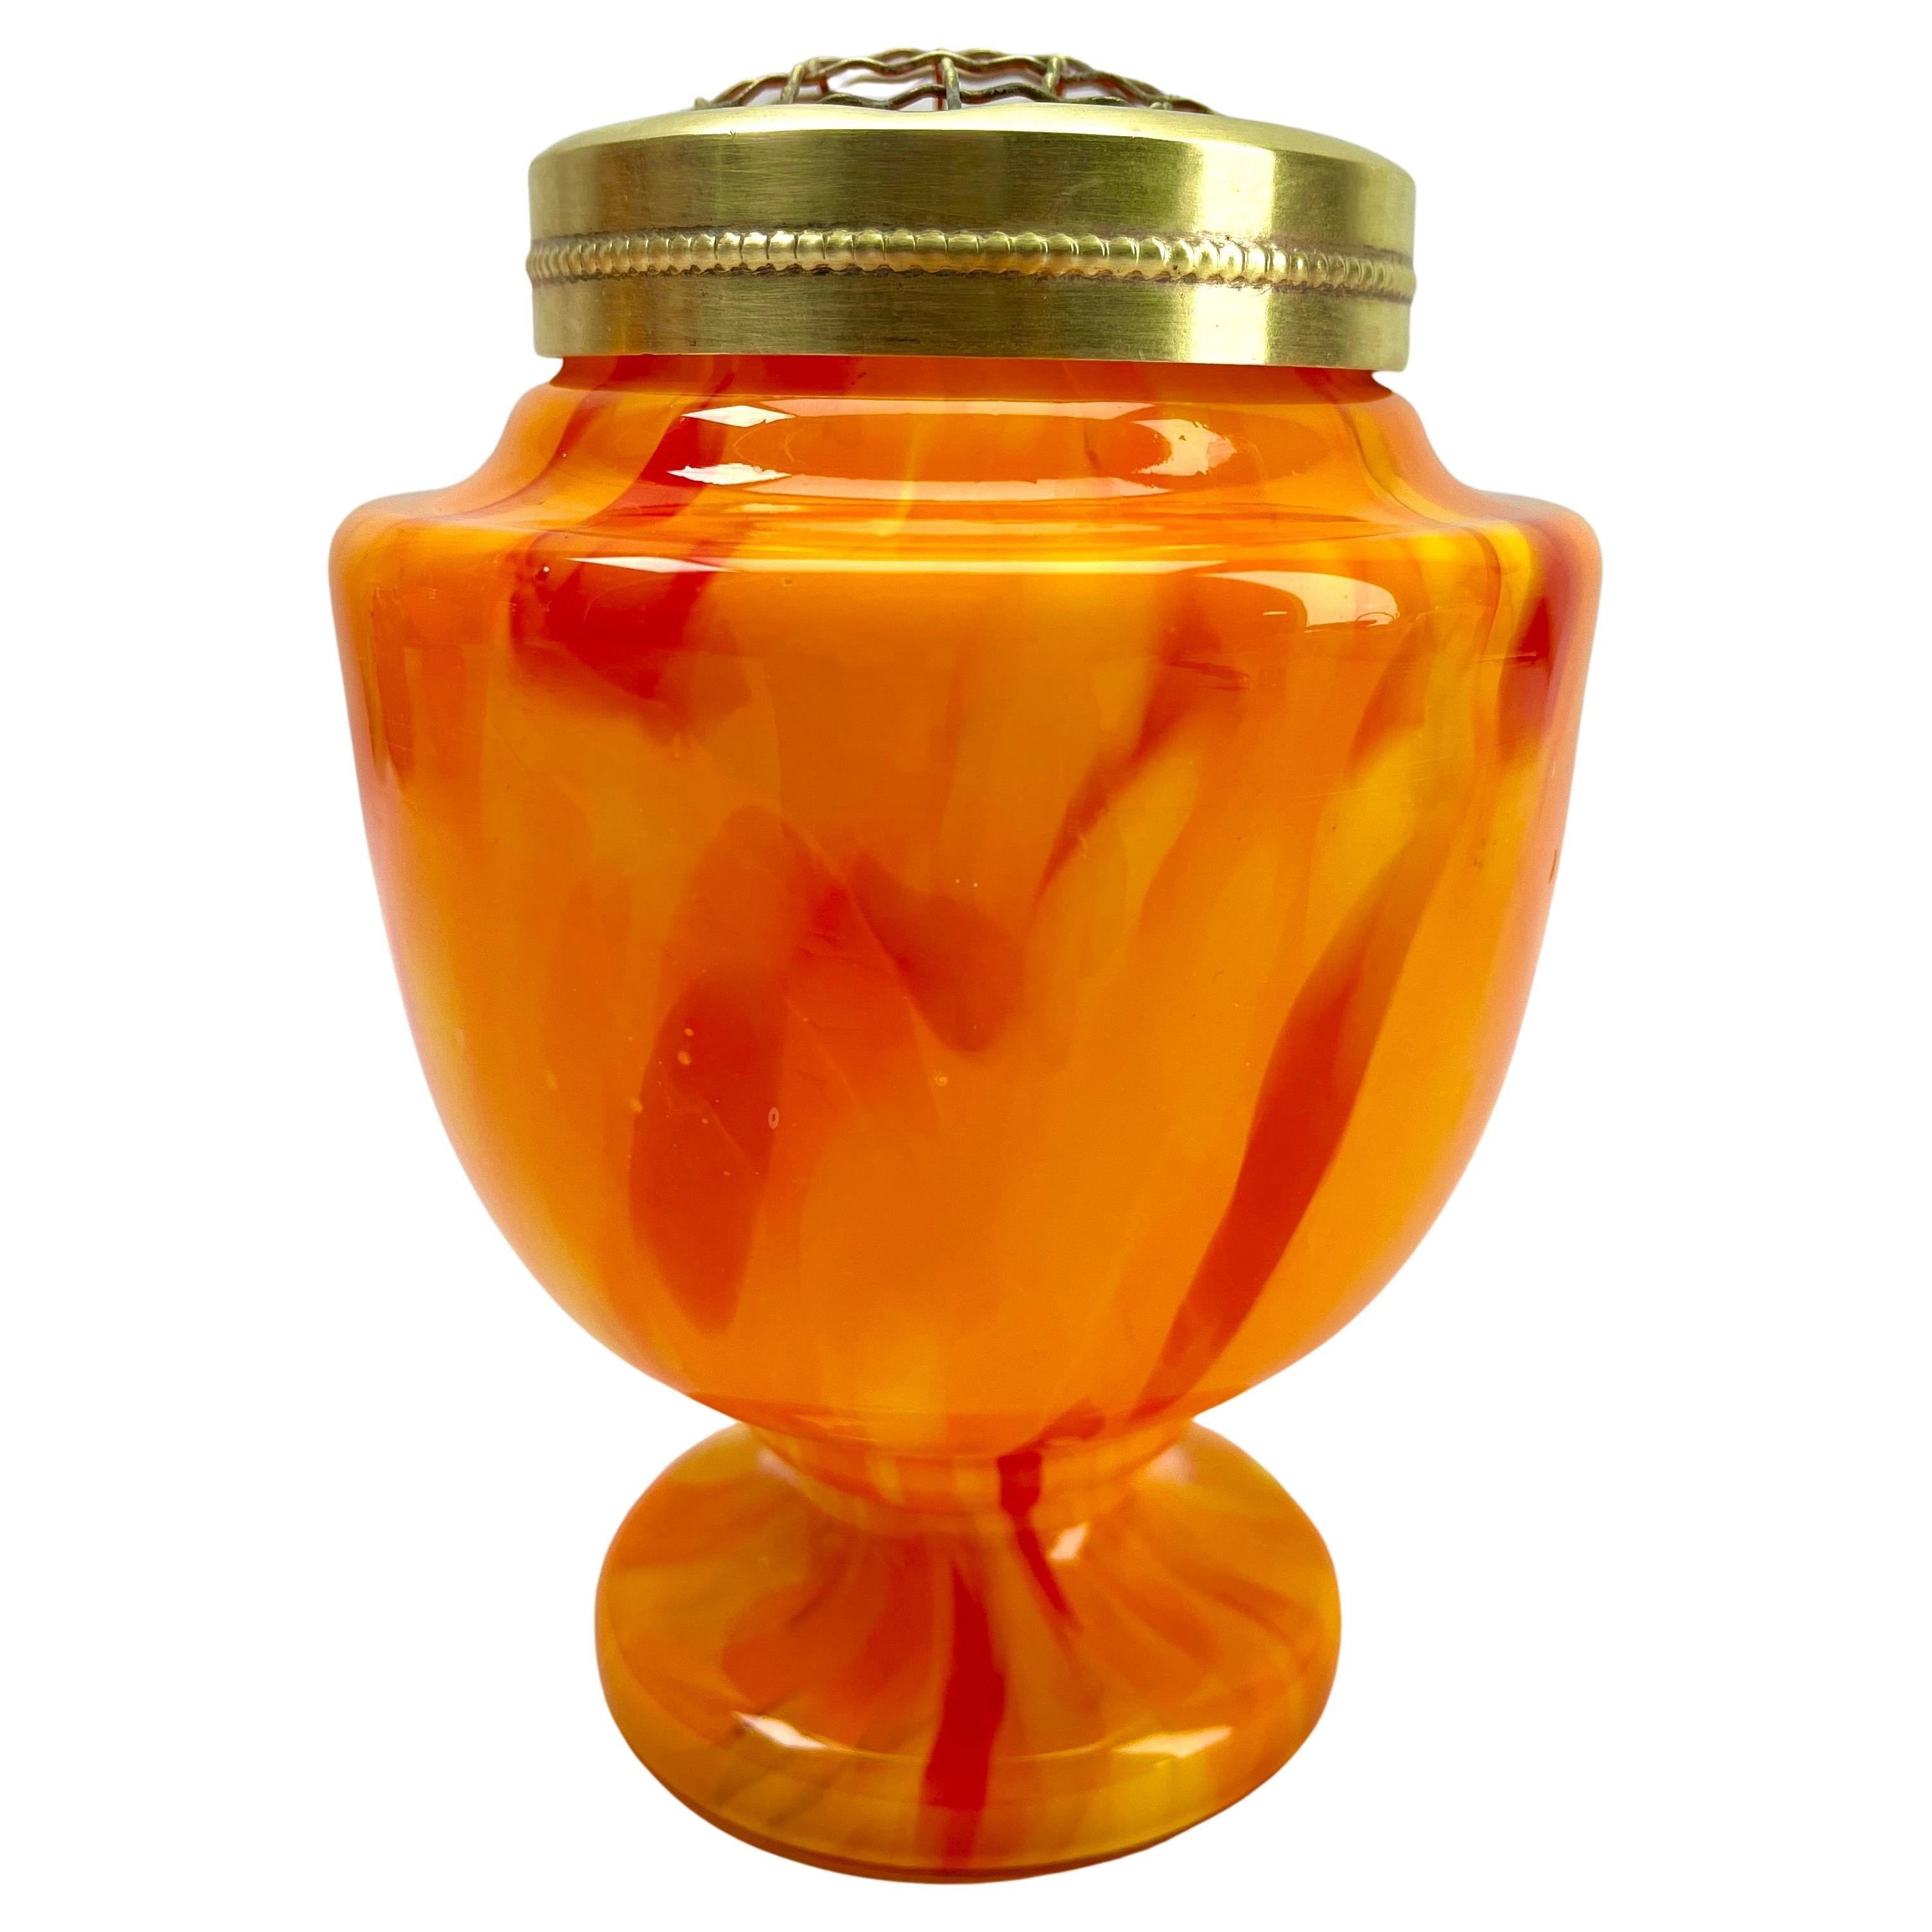 'Pique Fleurs'  Vase, in Multi Color Orange Decor with Grille, Late 1930s